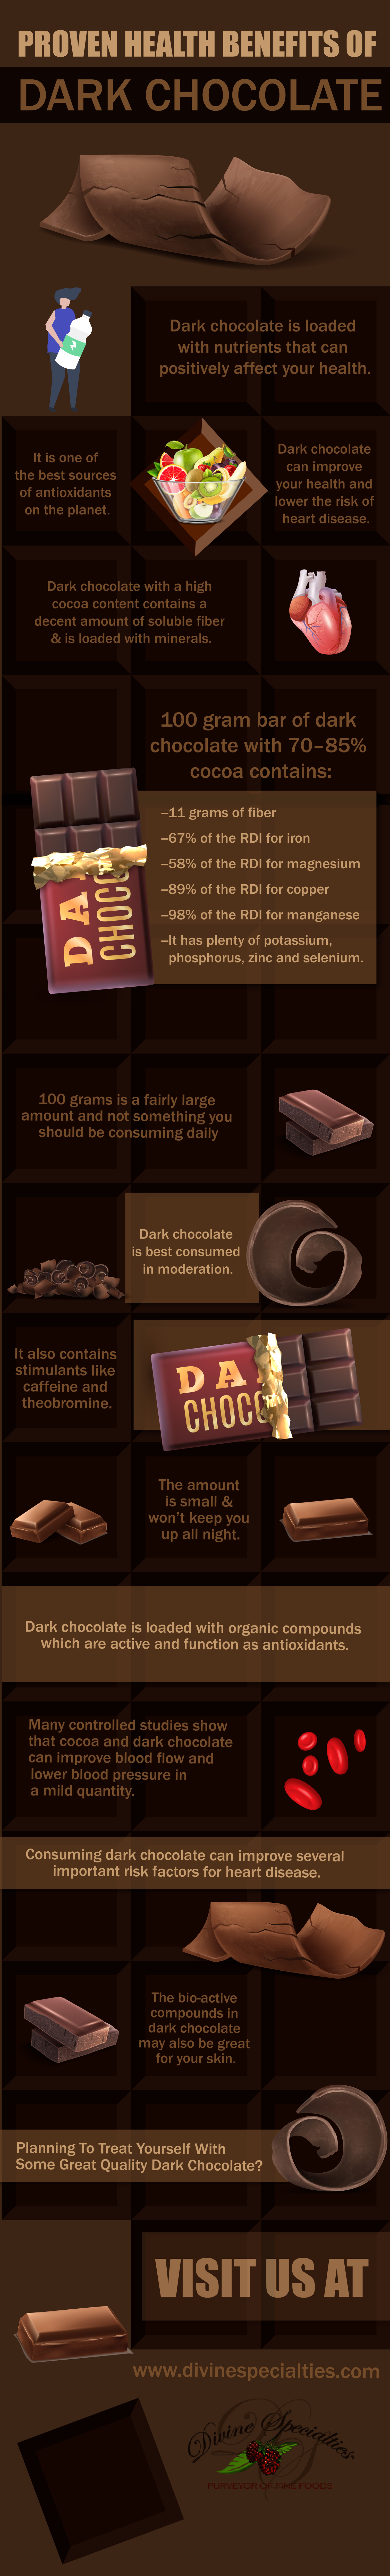 Proven Benefits of Dark Chocolate